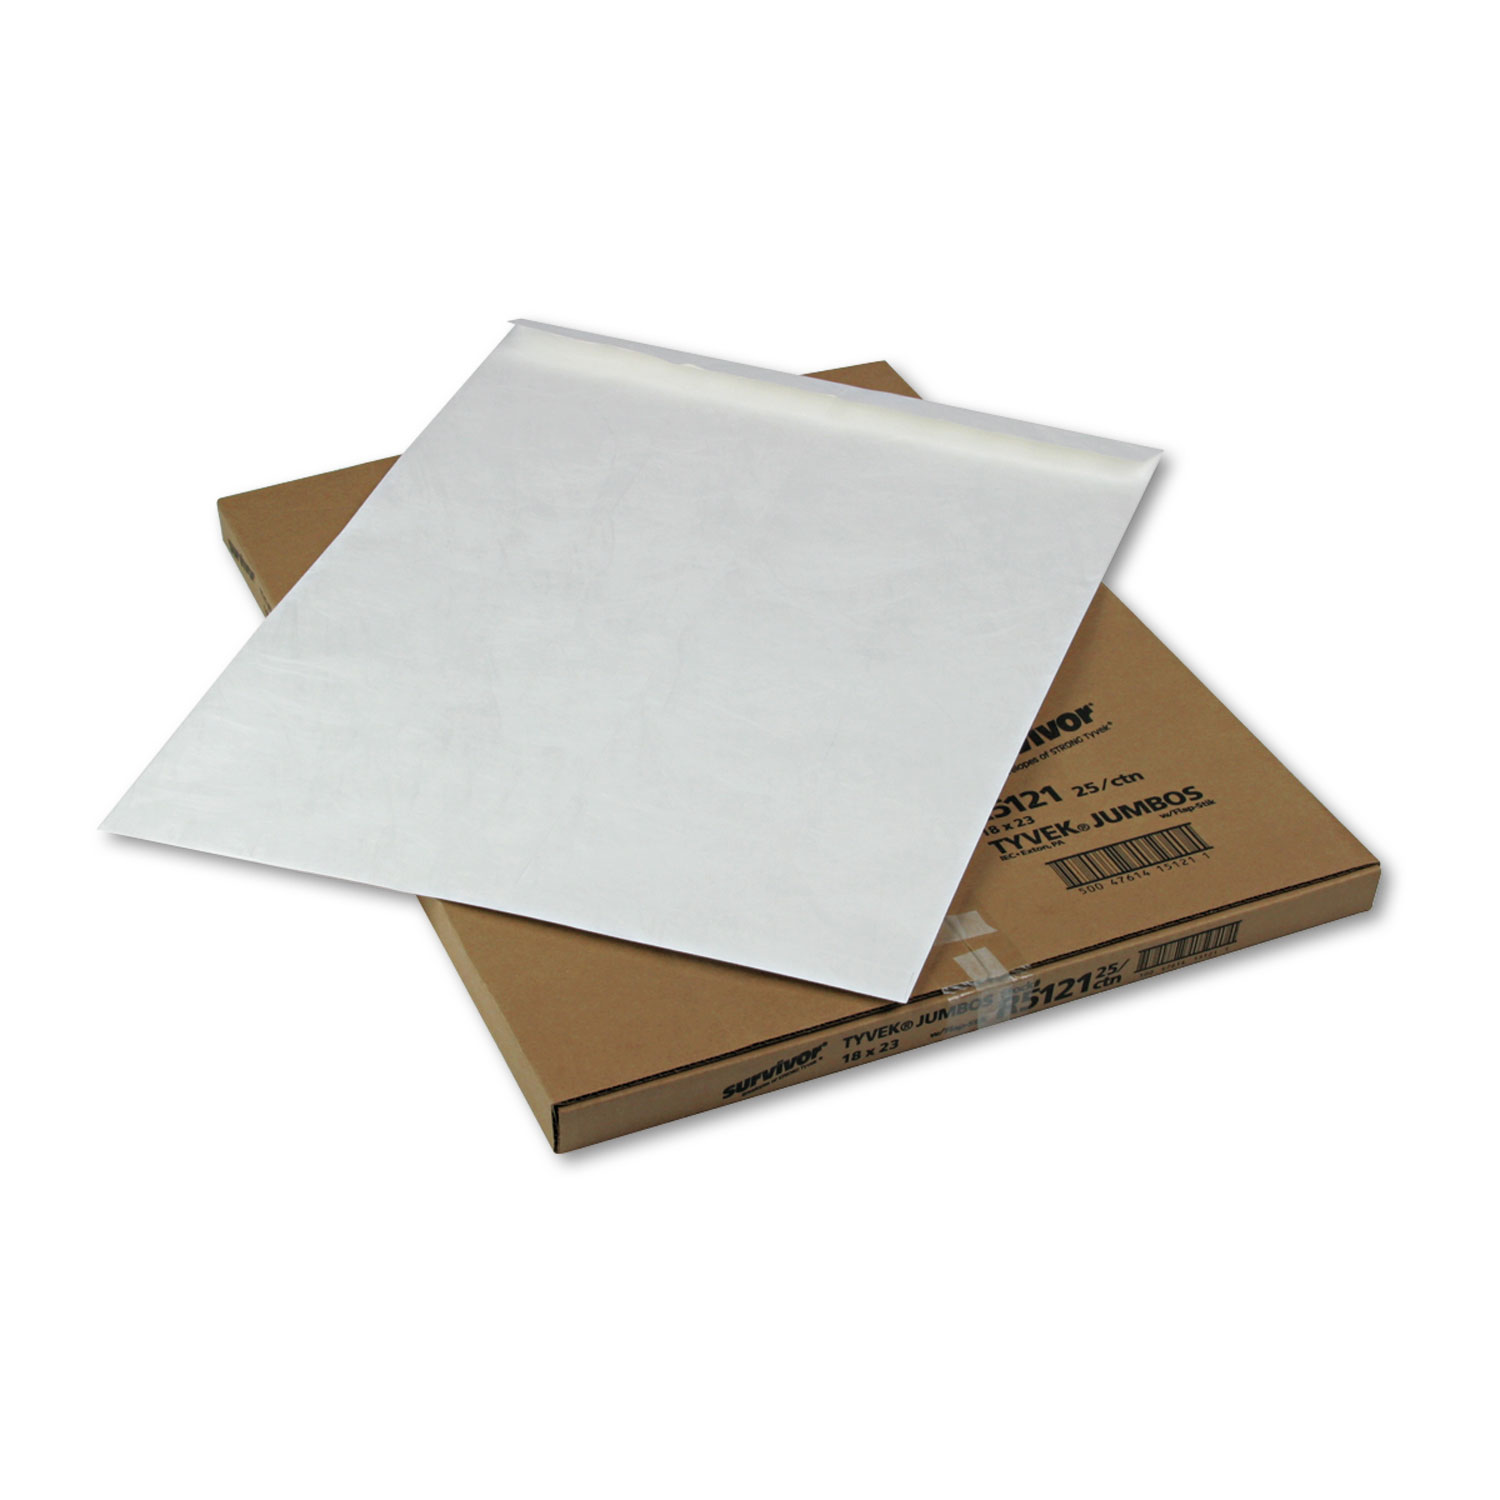  Survivor QUAR5121 Catalog Mailers Made of DuPont Tyvek, Self-Adhesive Closure, 18 x 23, White, 25/Box (QUAR5121) 